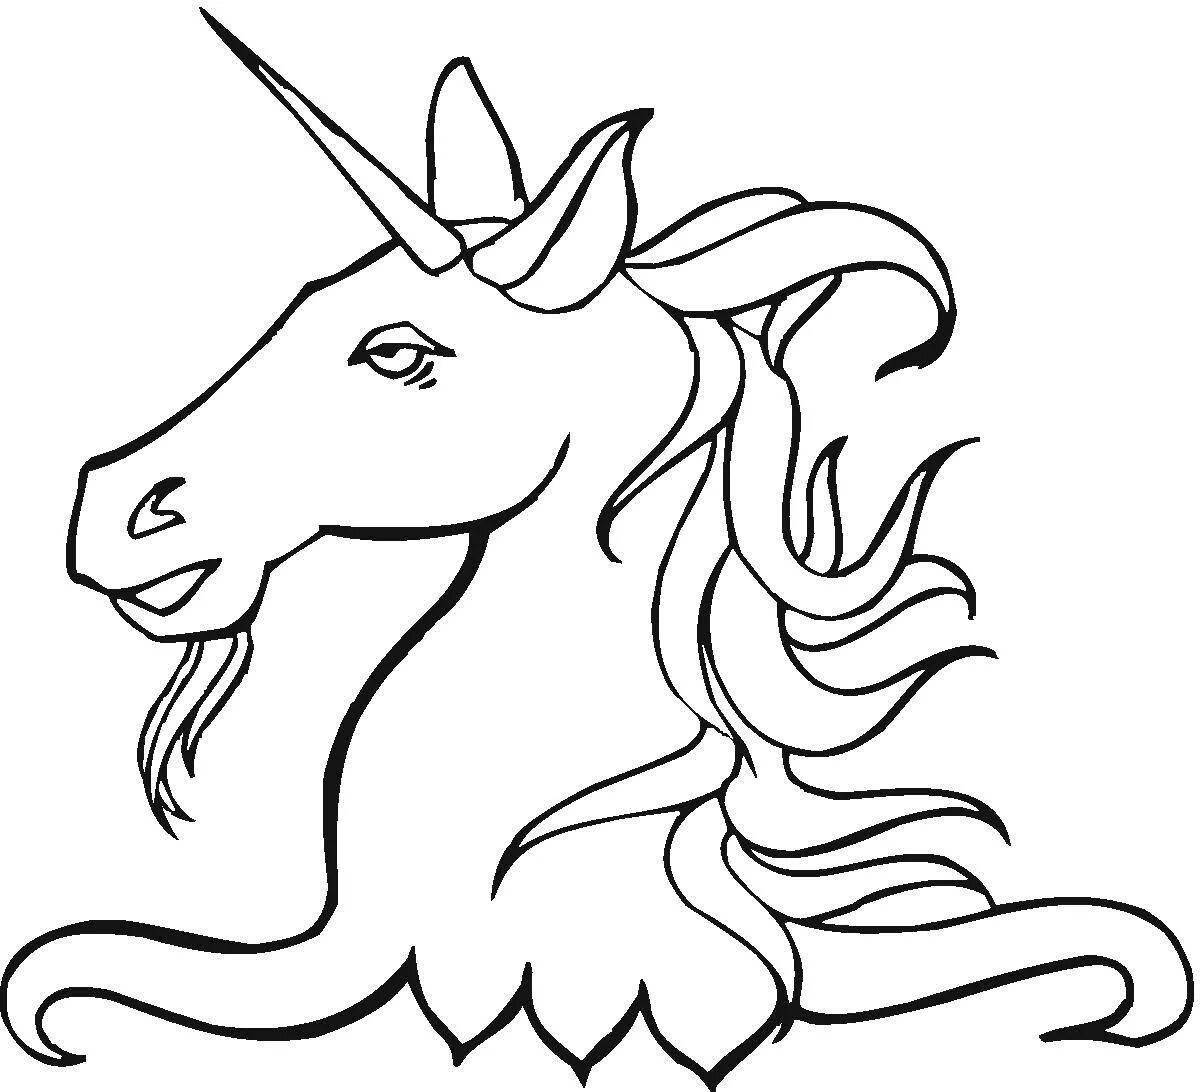 Fancy unicorn coloring book